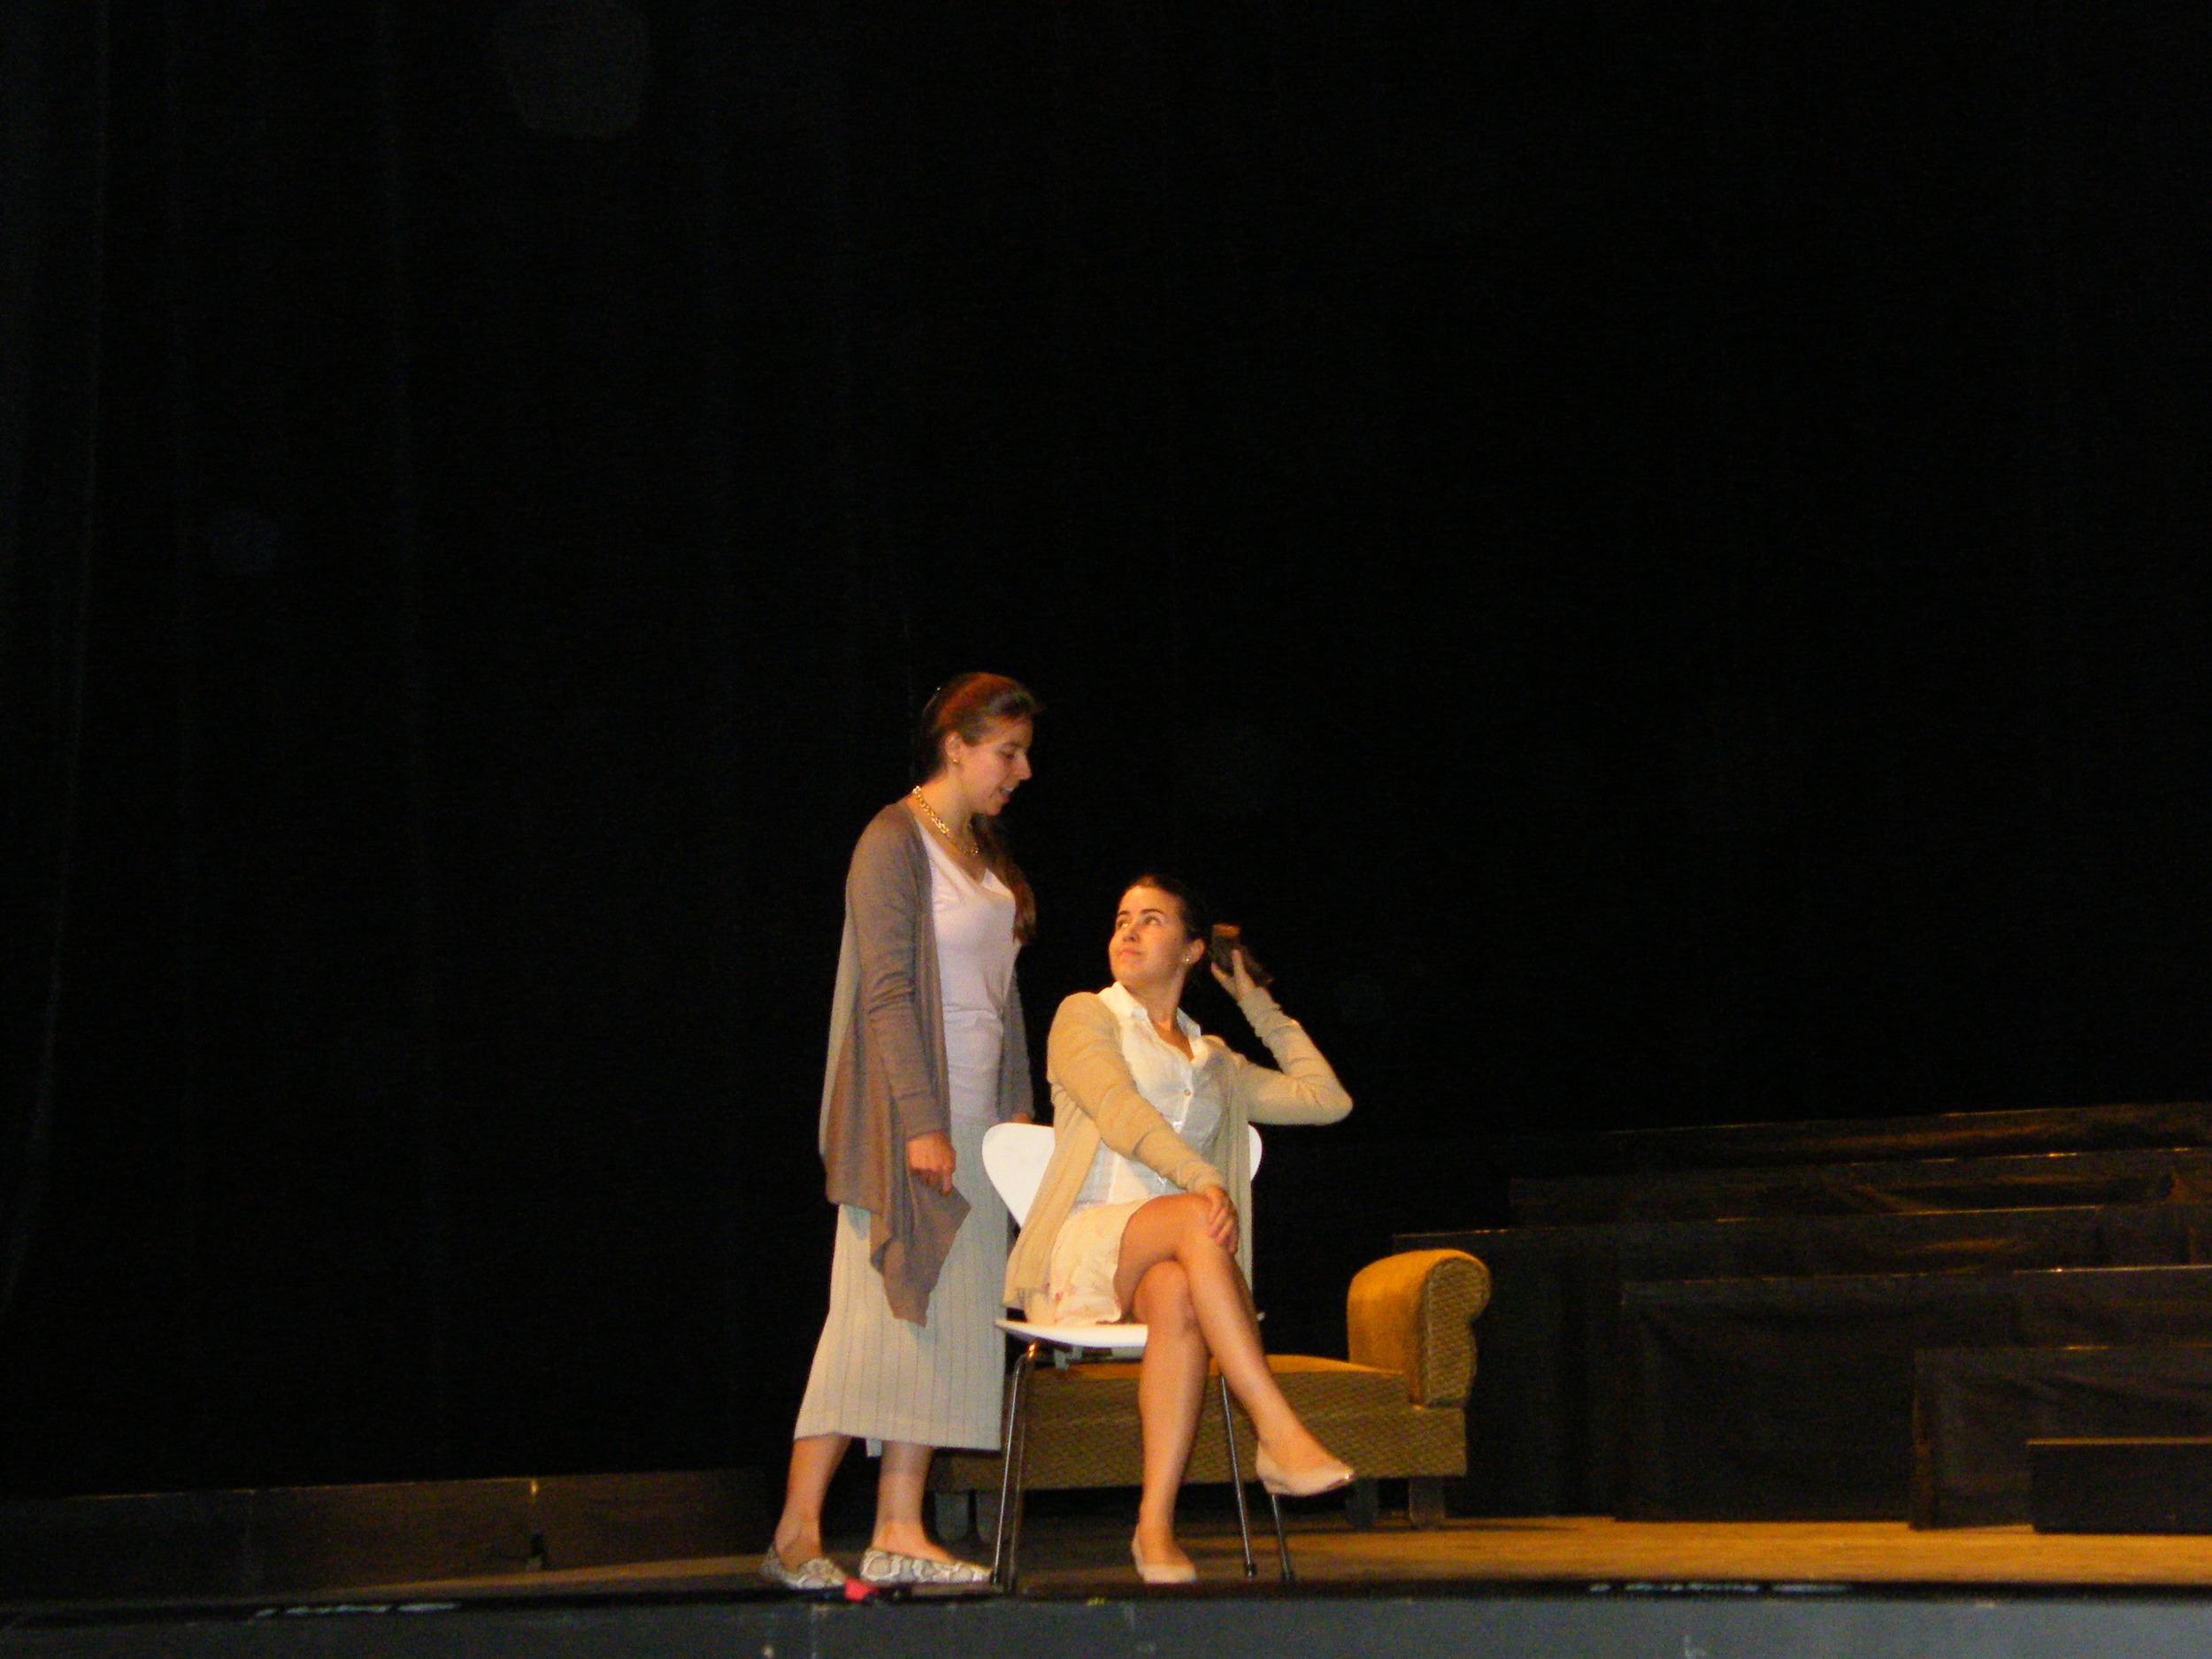 Dress rehearsel 'Le nozze di Figaro' - Susanna (Elsi Spanoghe) and Marcellina (Marijke Tielemans- De Bolle) (November 2015)